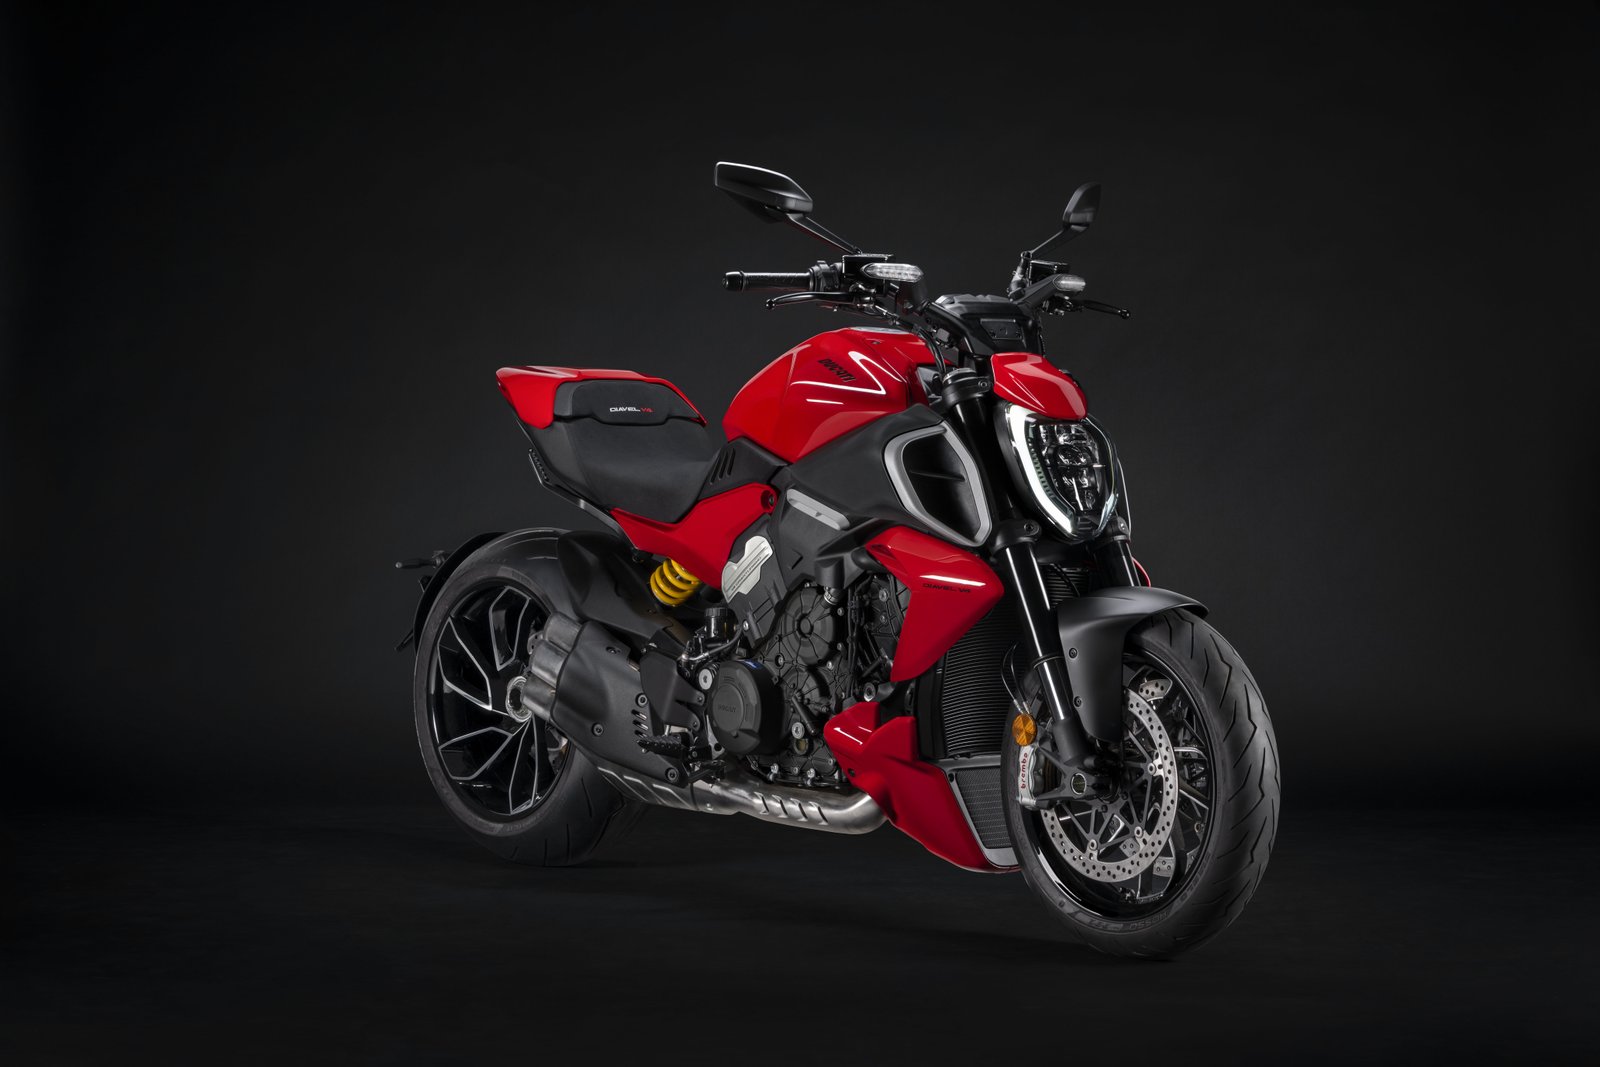 Ducati Diavel V4 is the “Moto più bella” (Most Beautiful Bike) at EICMA 2022